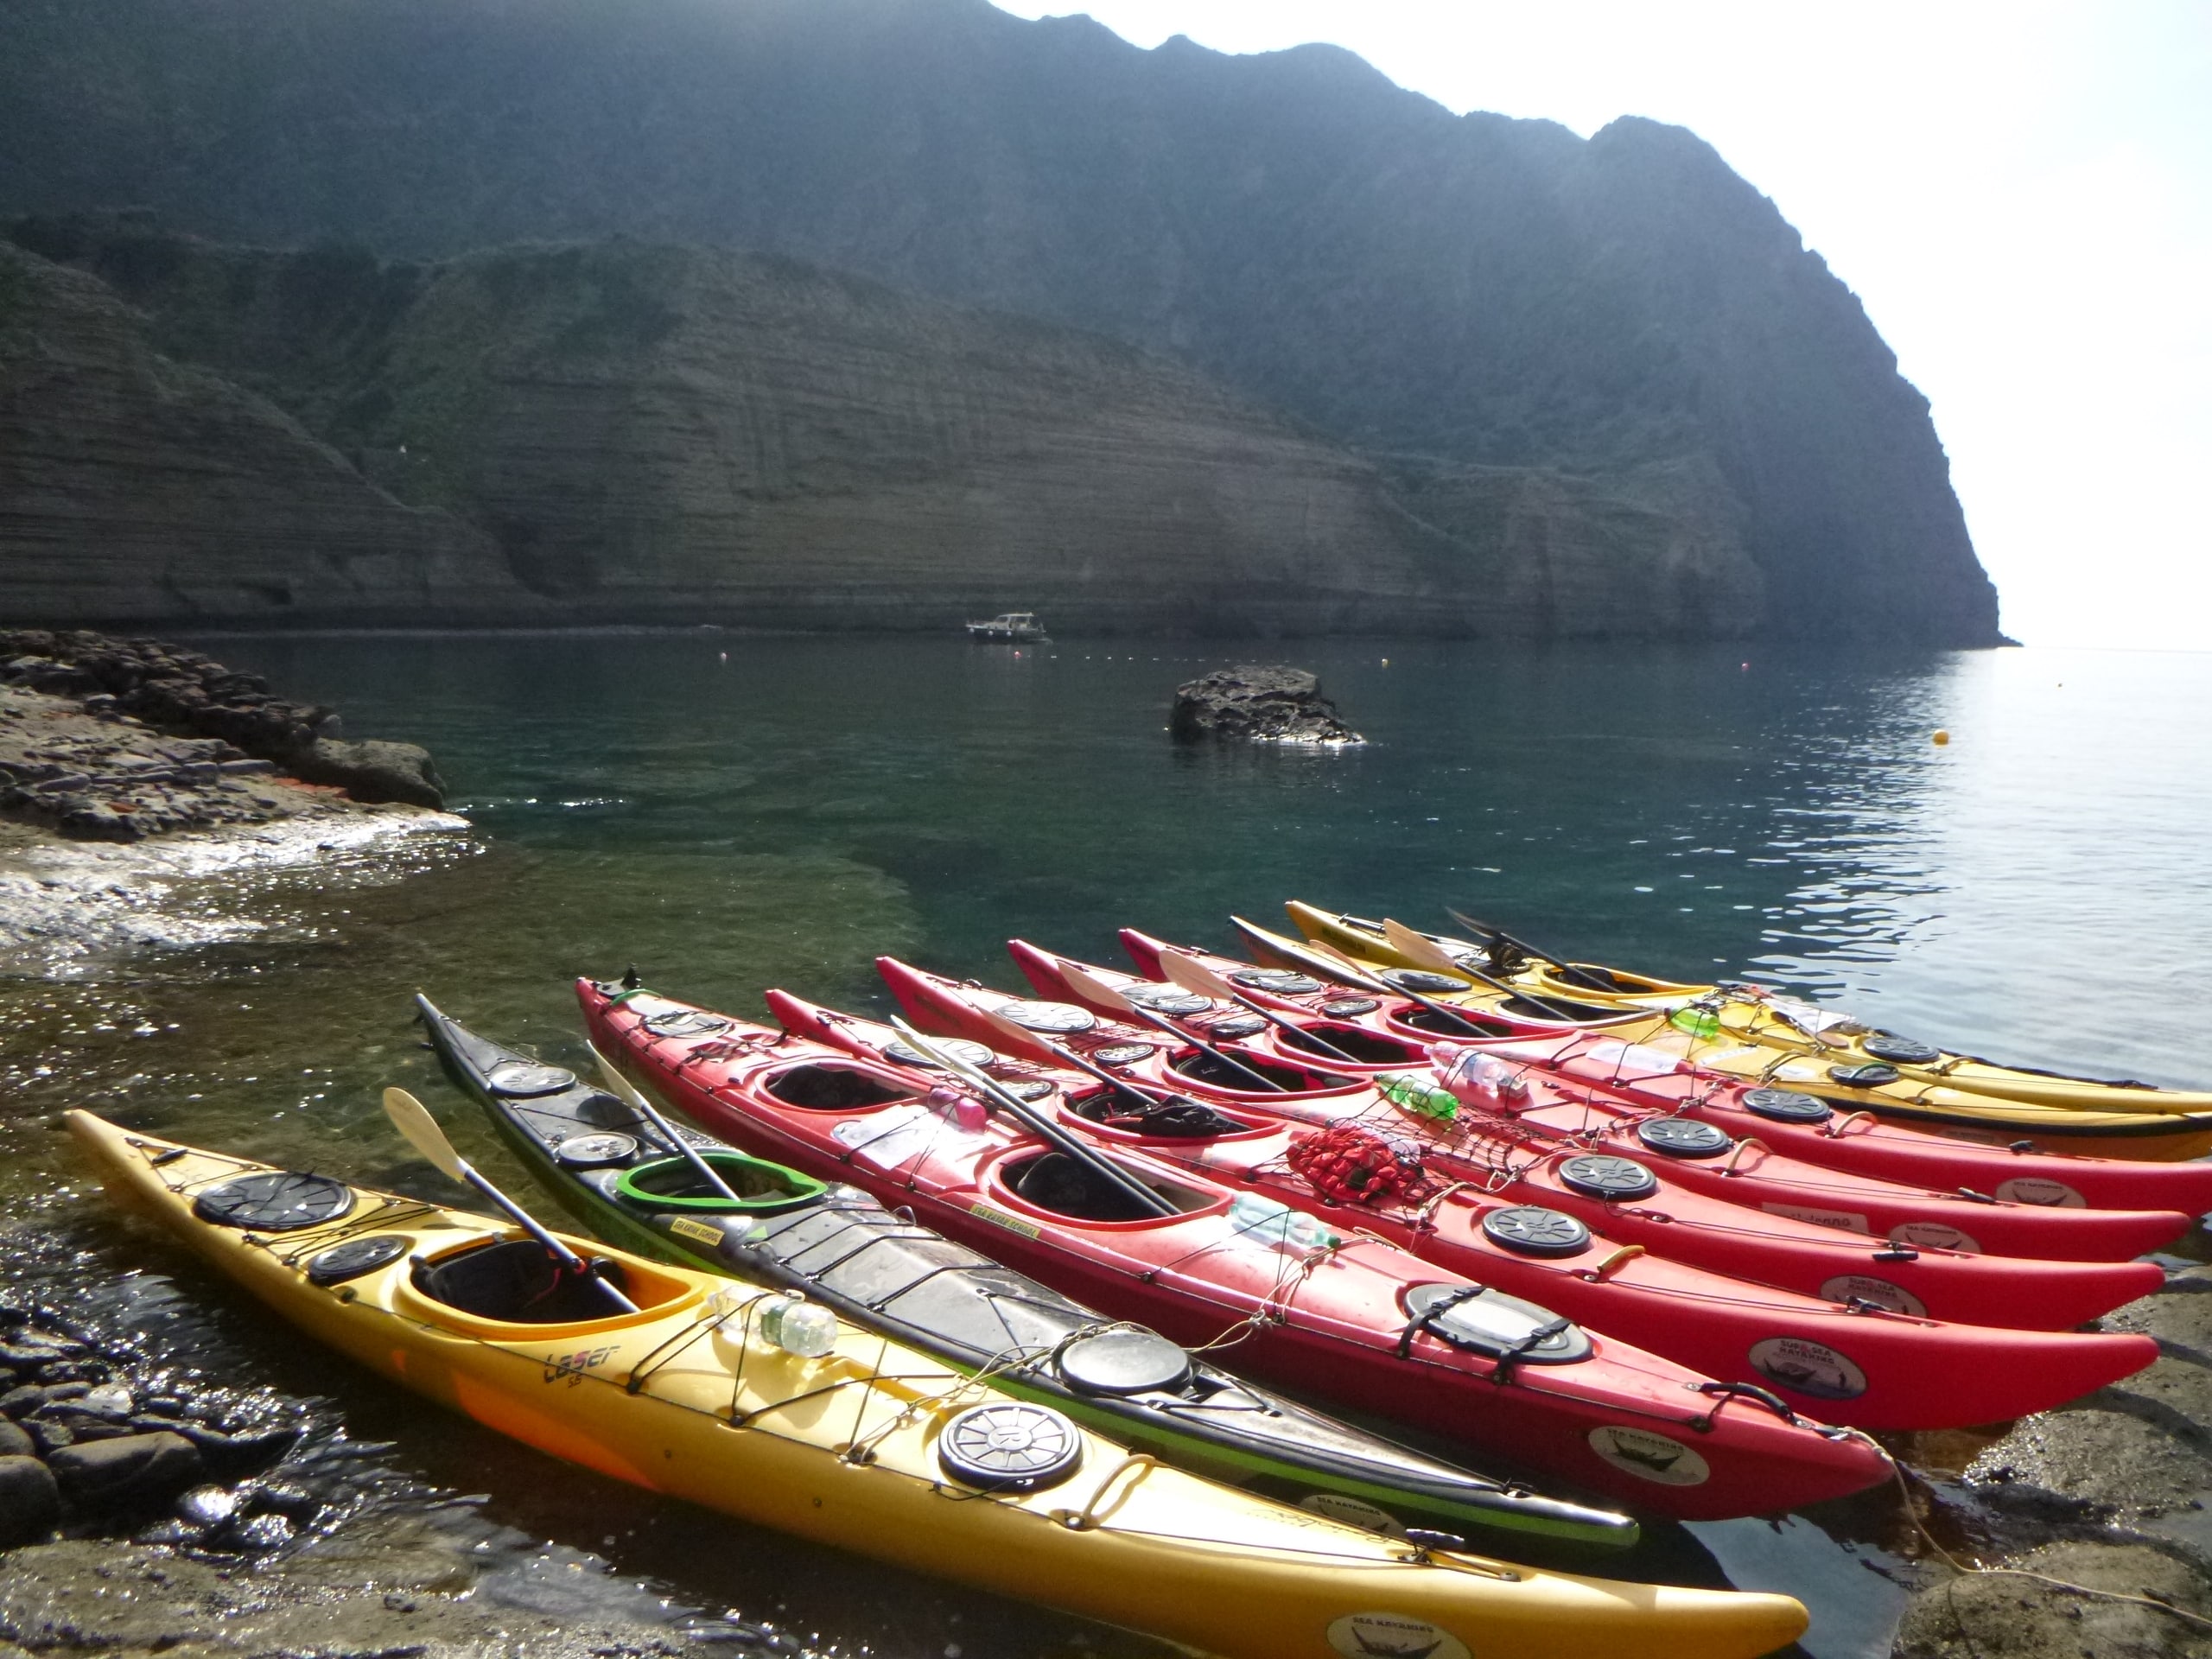 I nostri Kayak da Mare alle isole Eolie, sicilia, Italia